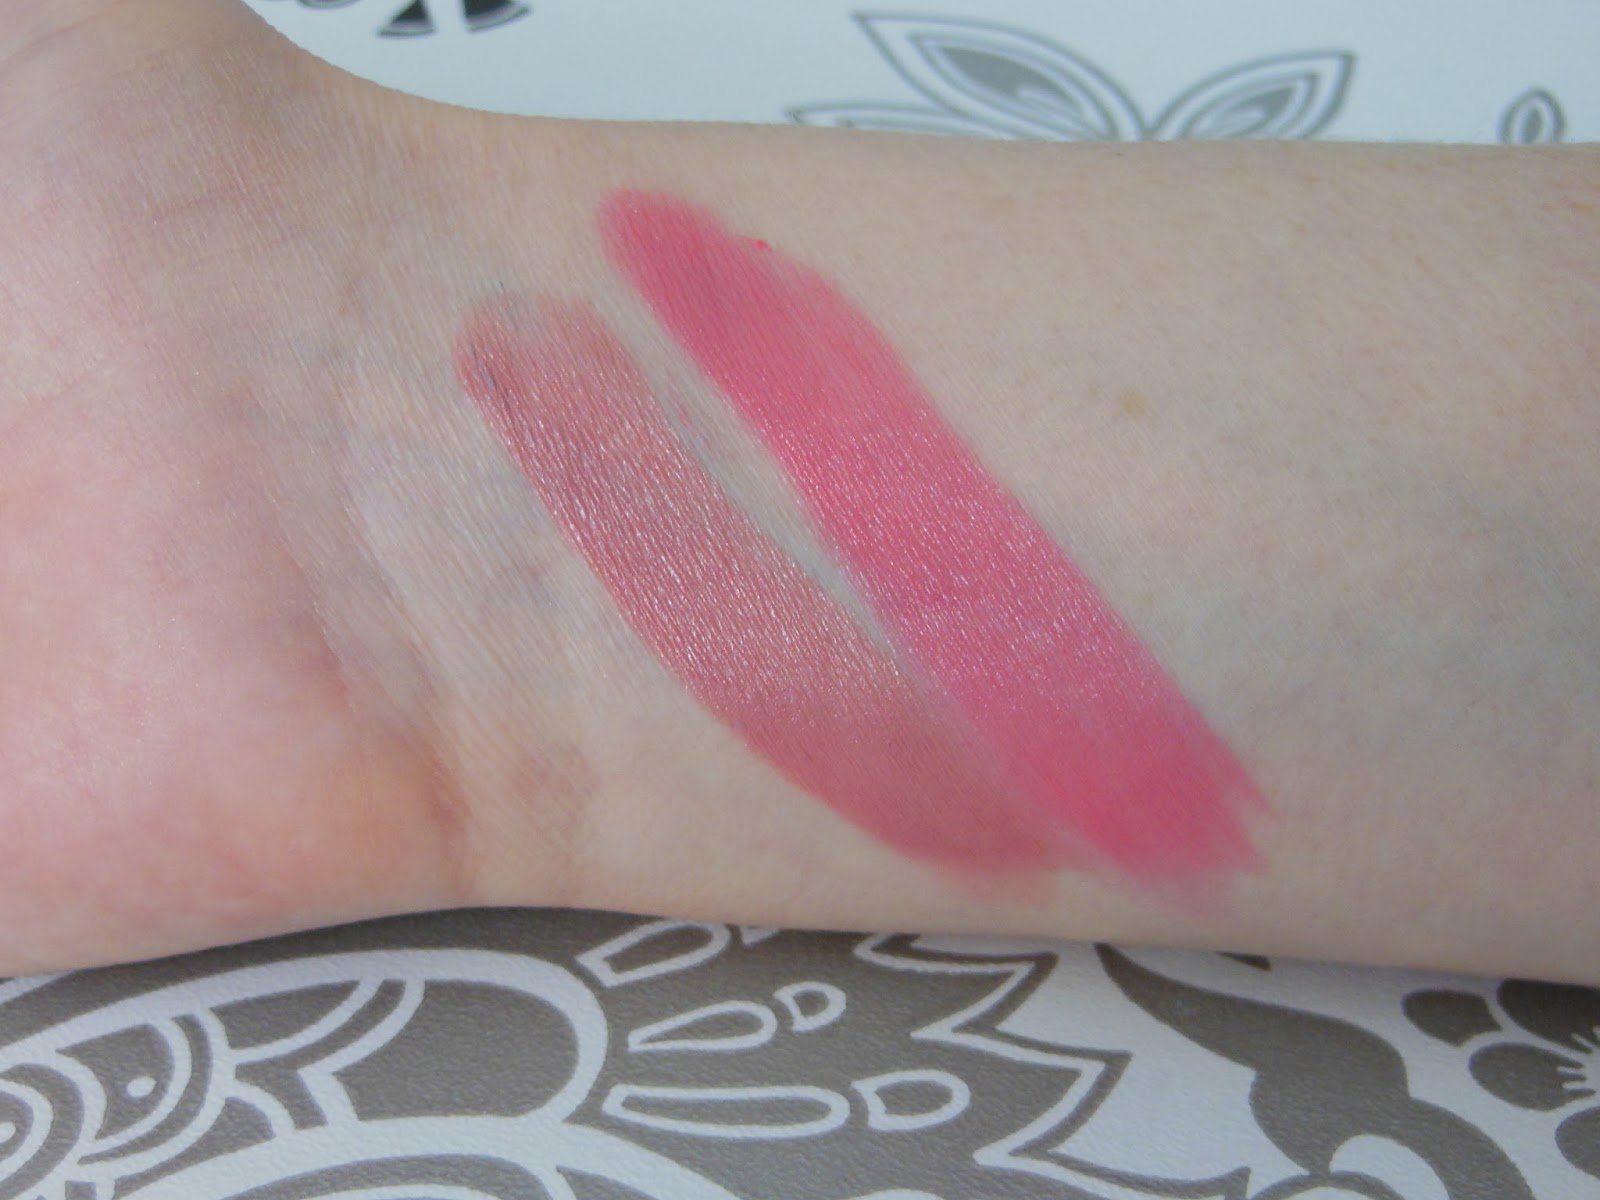 Kiko life in rio collection creamy touch lipsticks swatches